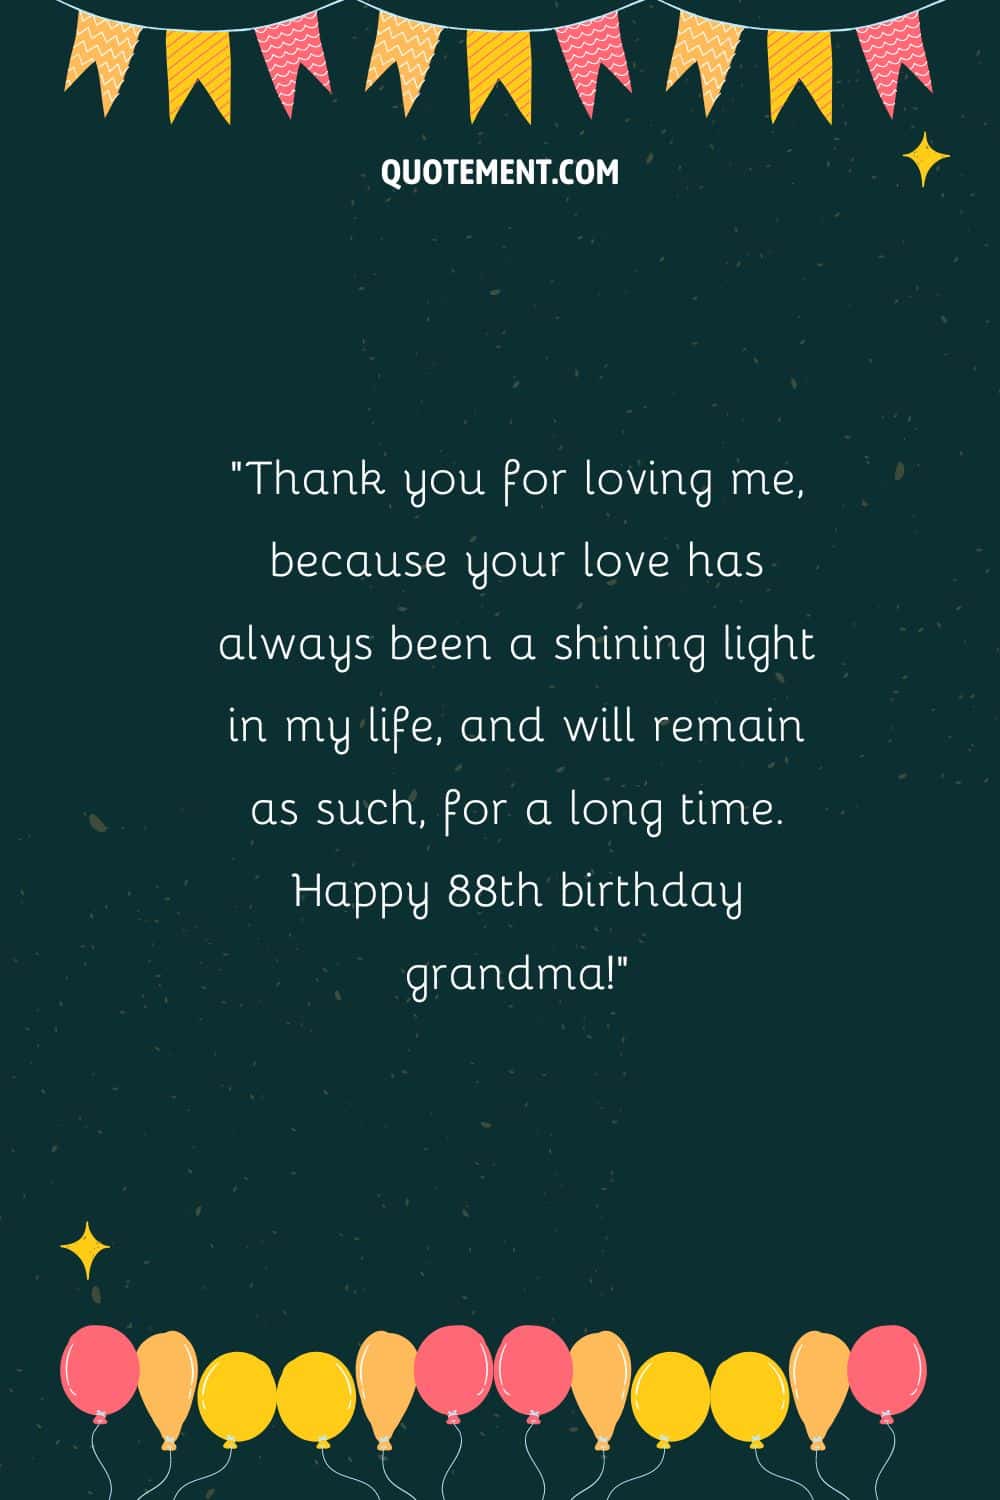 Thank you for loving me, Happy 88th birthday grandma